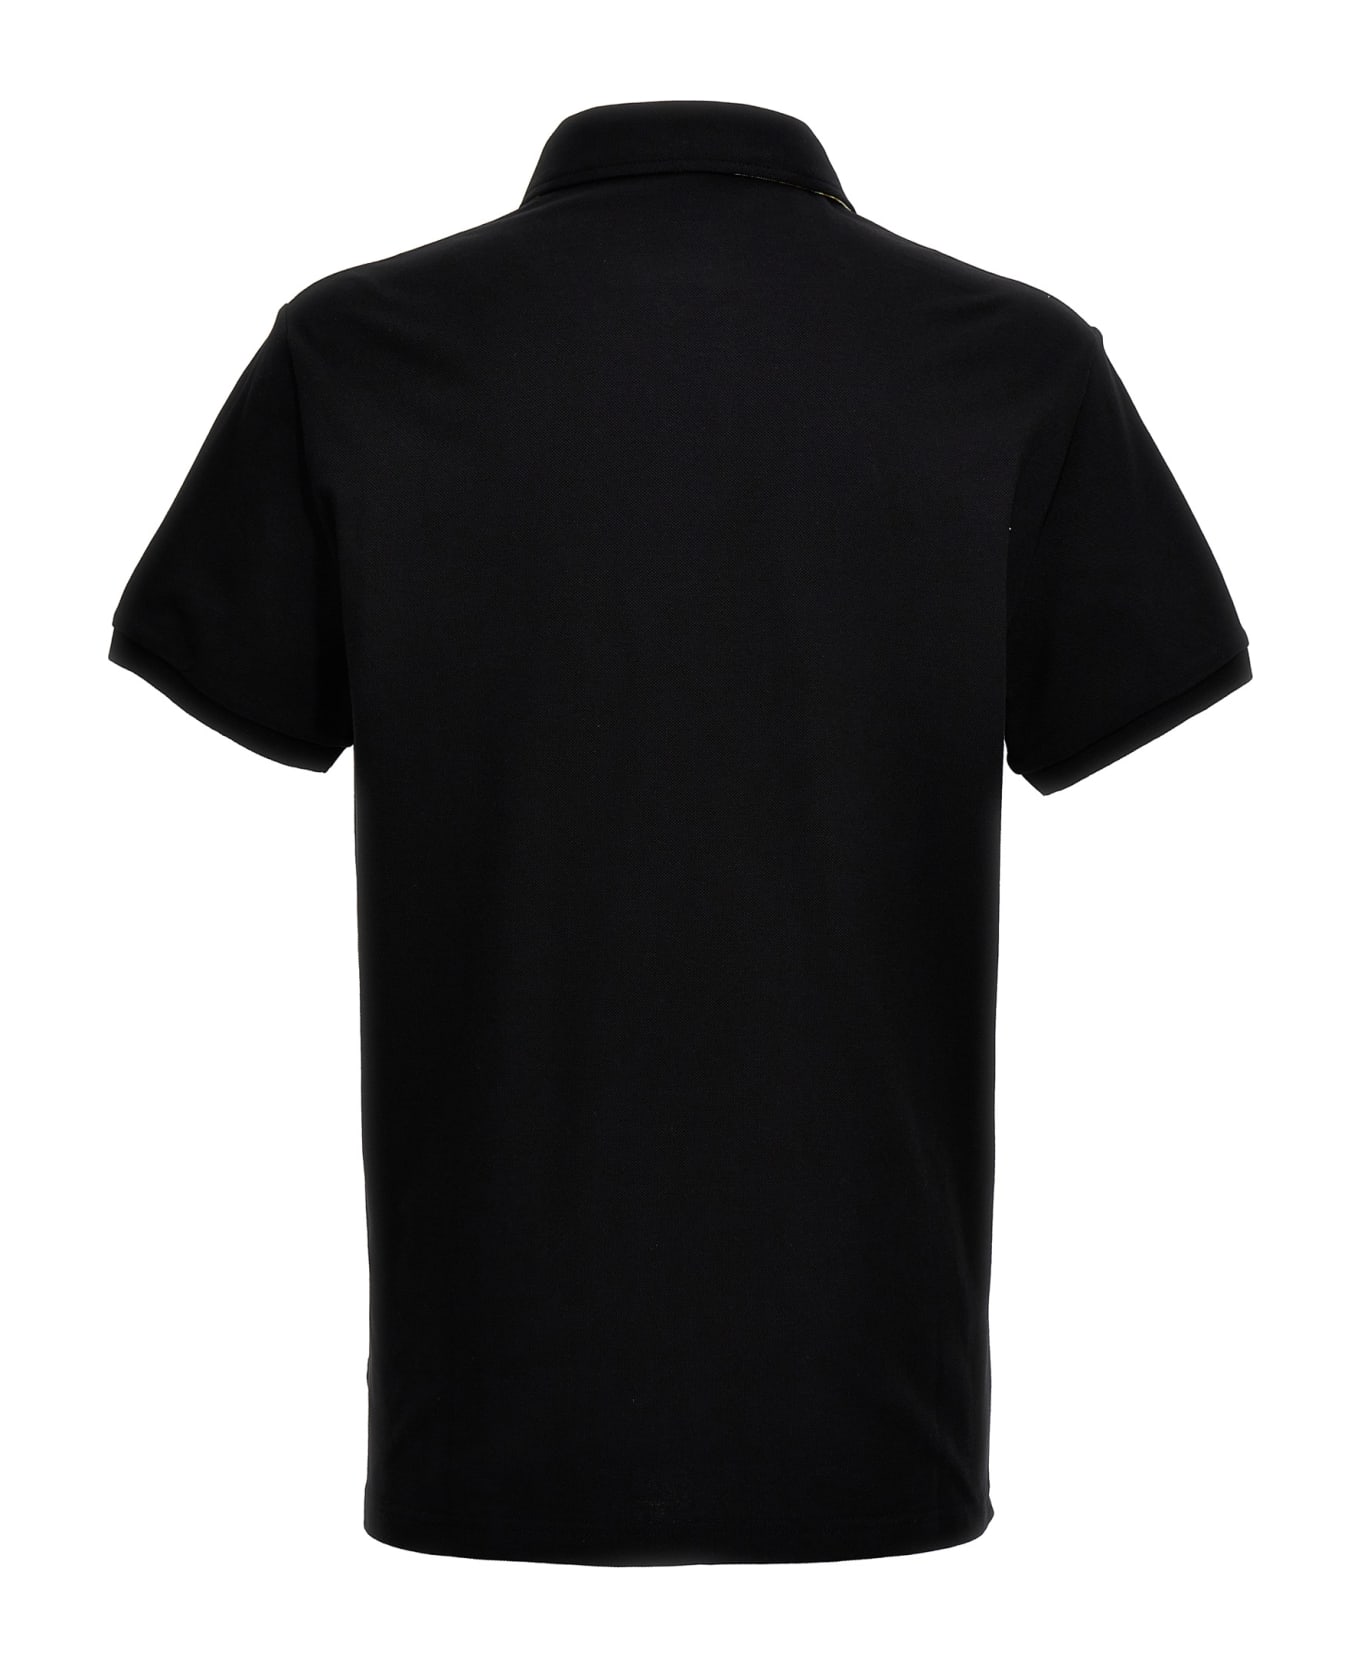 Etro Logo Embroidery Polo Shirt - Black